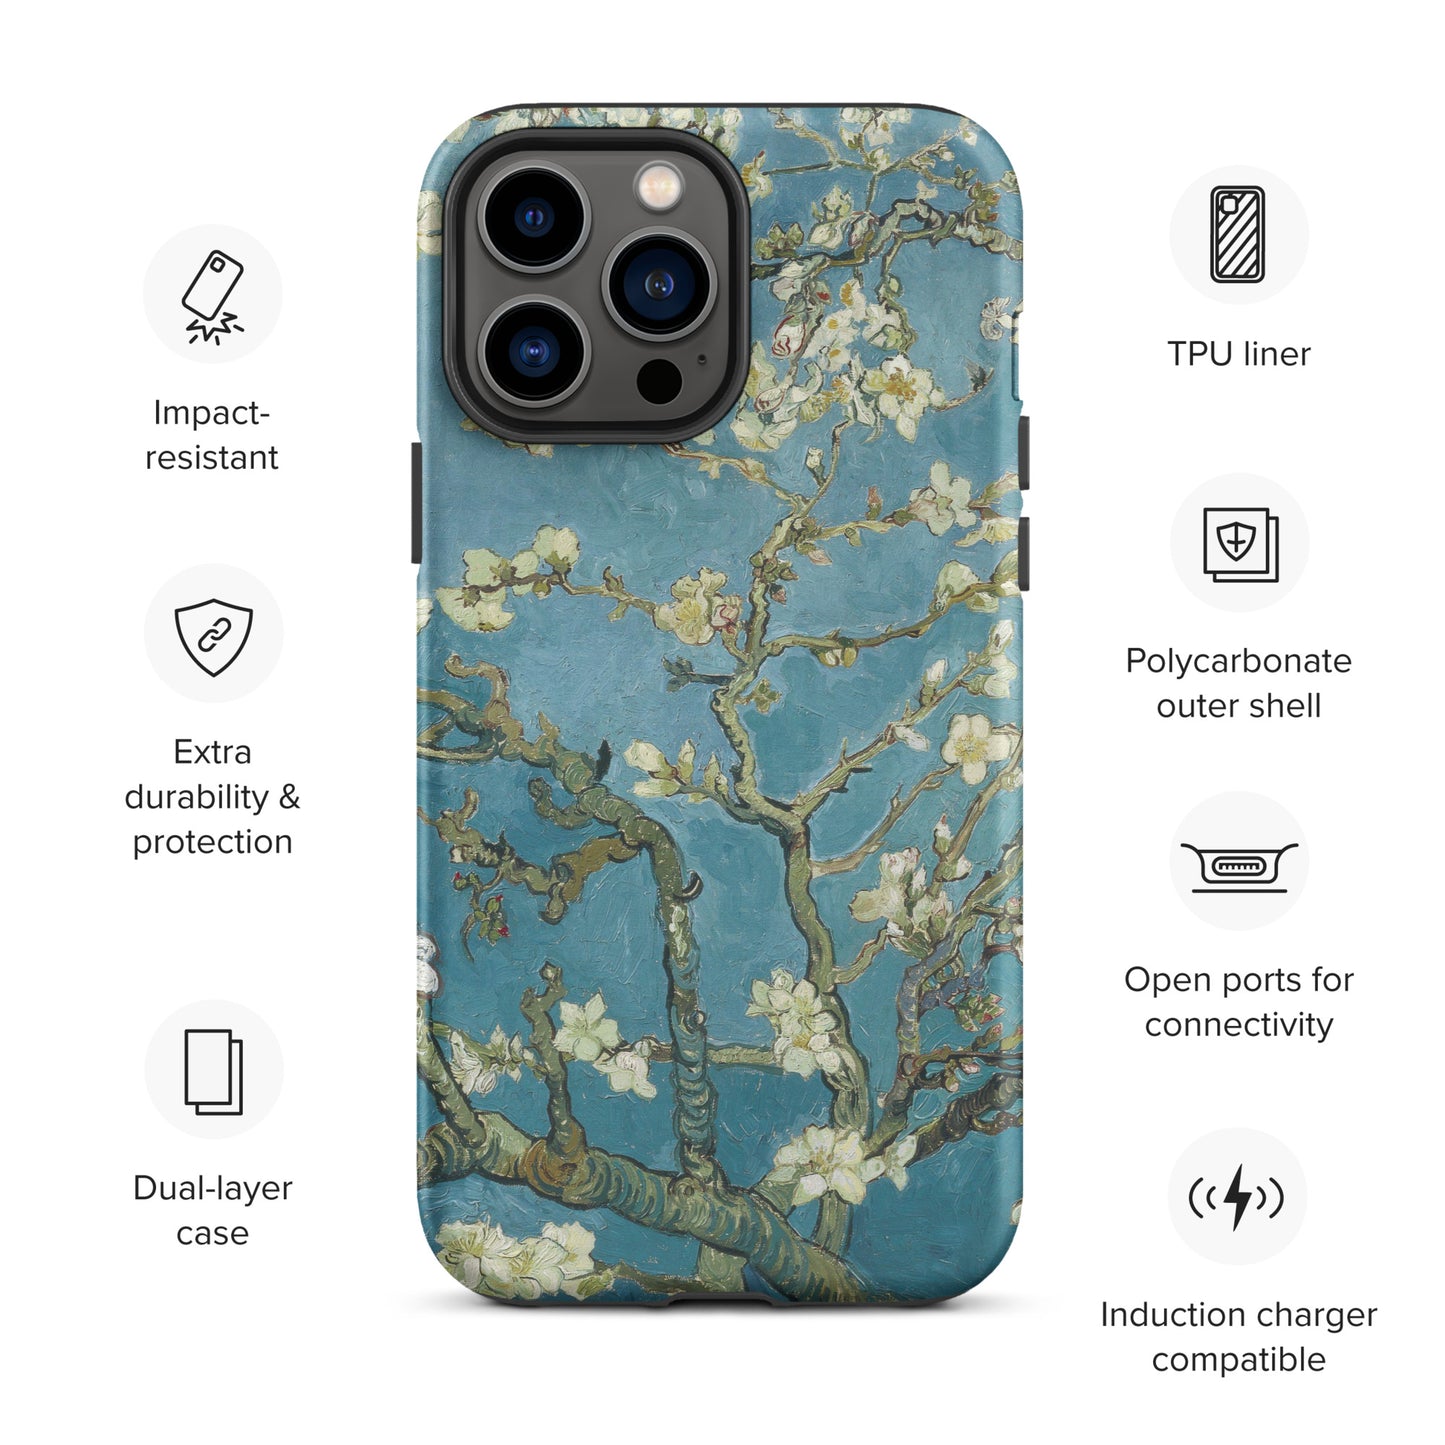 Almond Blossoms - Tough iPhone case